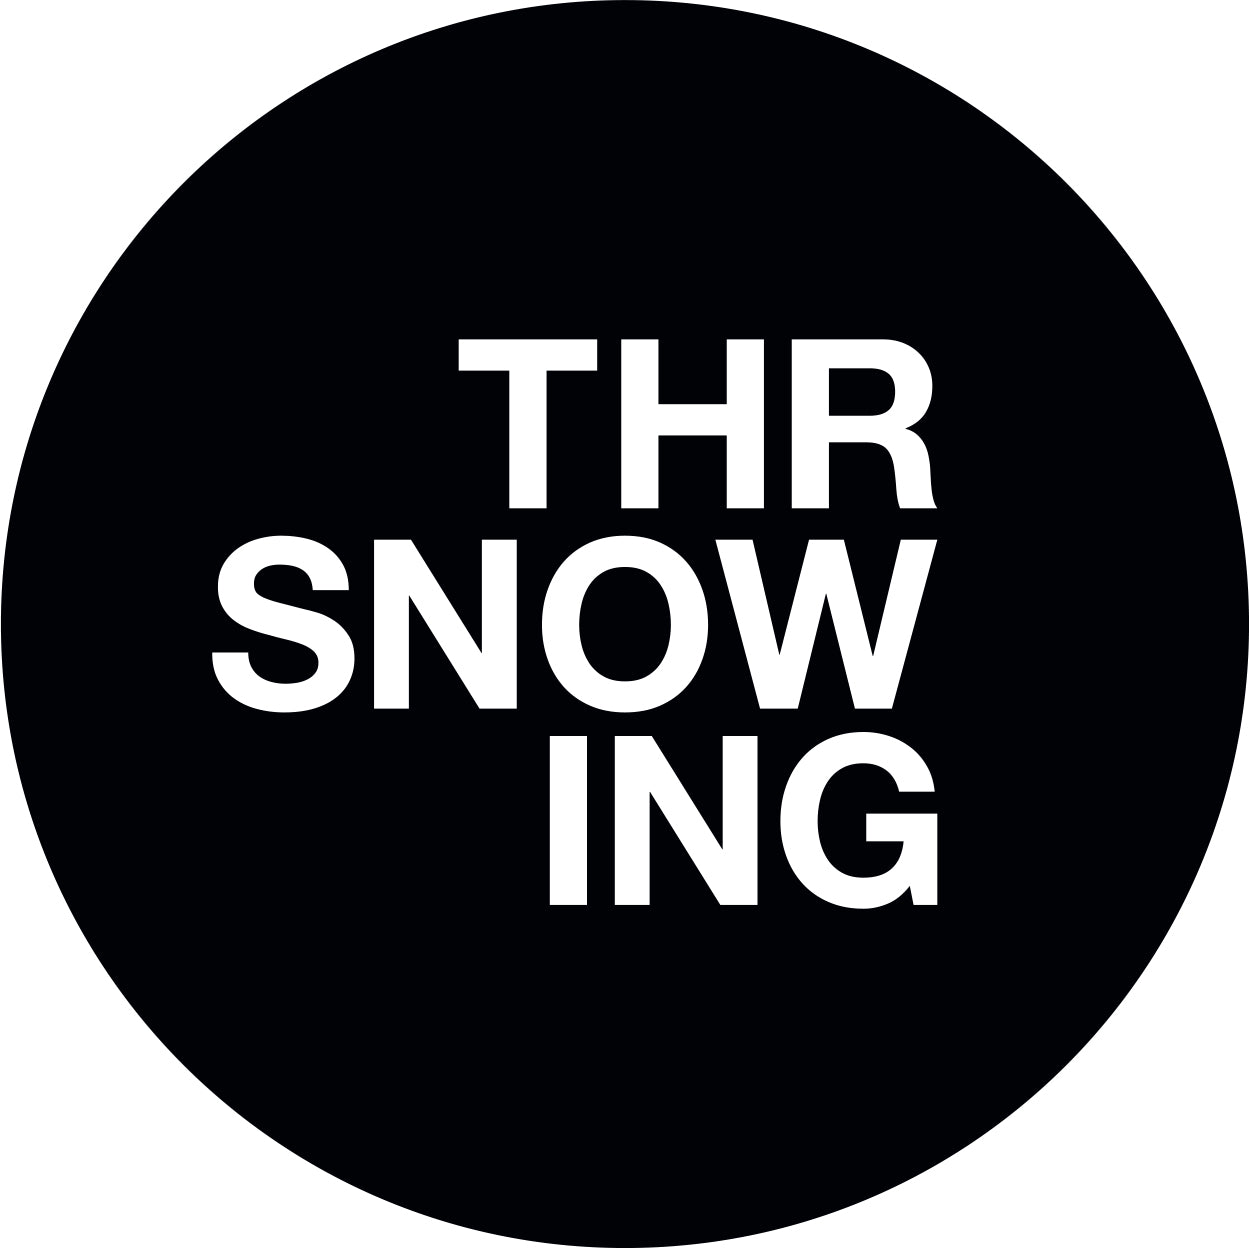 Throwing Snow - Mosaic VIPs Vinyl